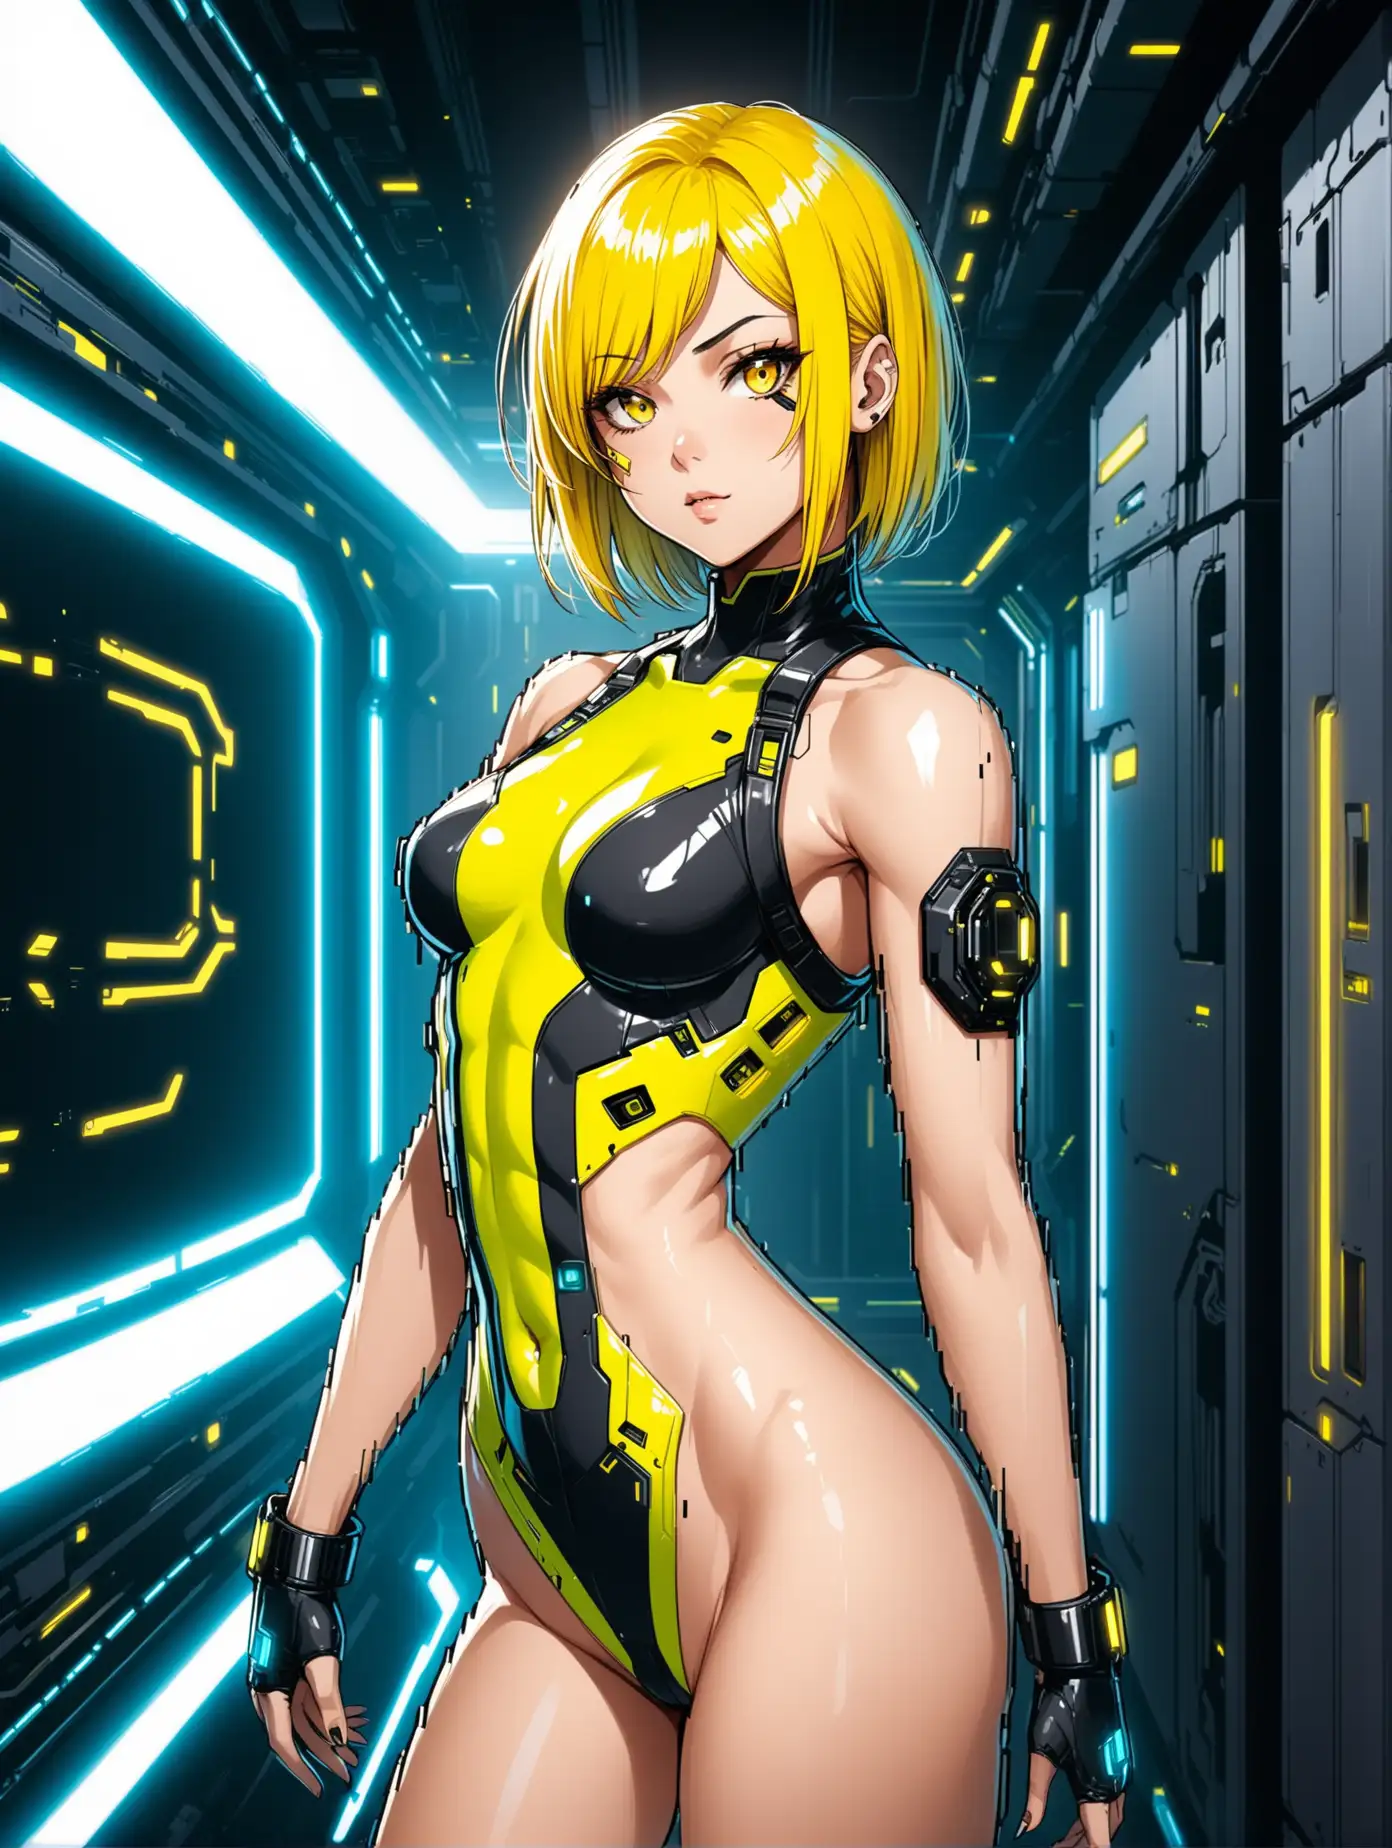 Futuristic Cyberpunk Heroine Posing in YellowBlackWhite Designed Apartment